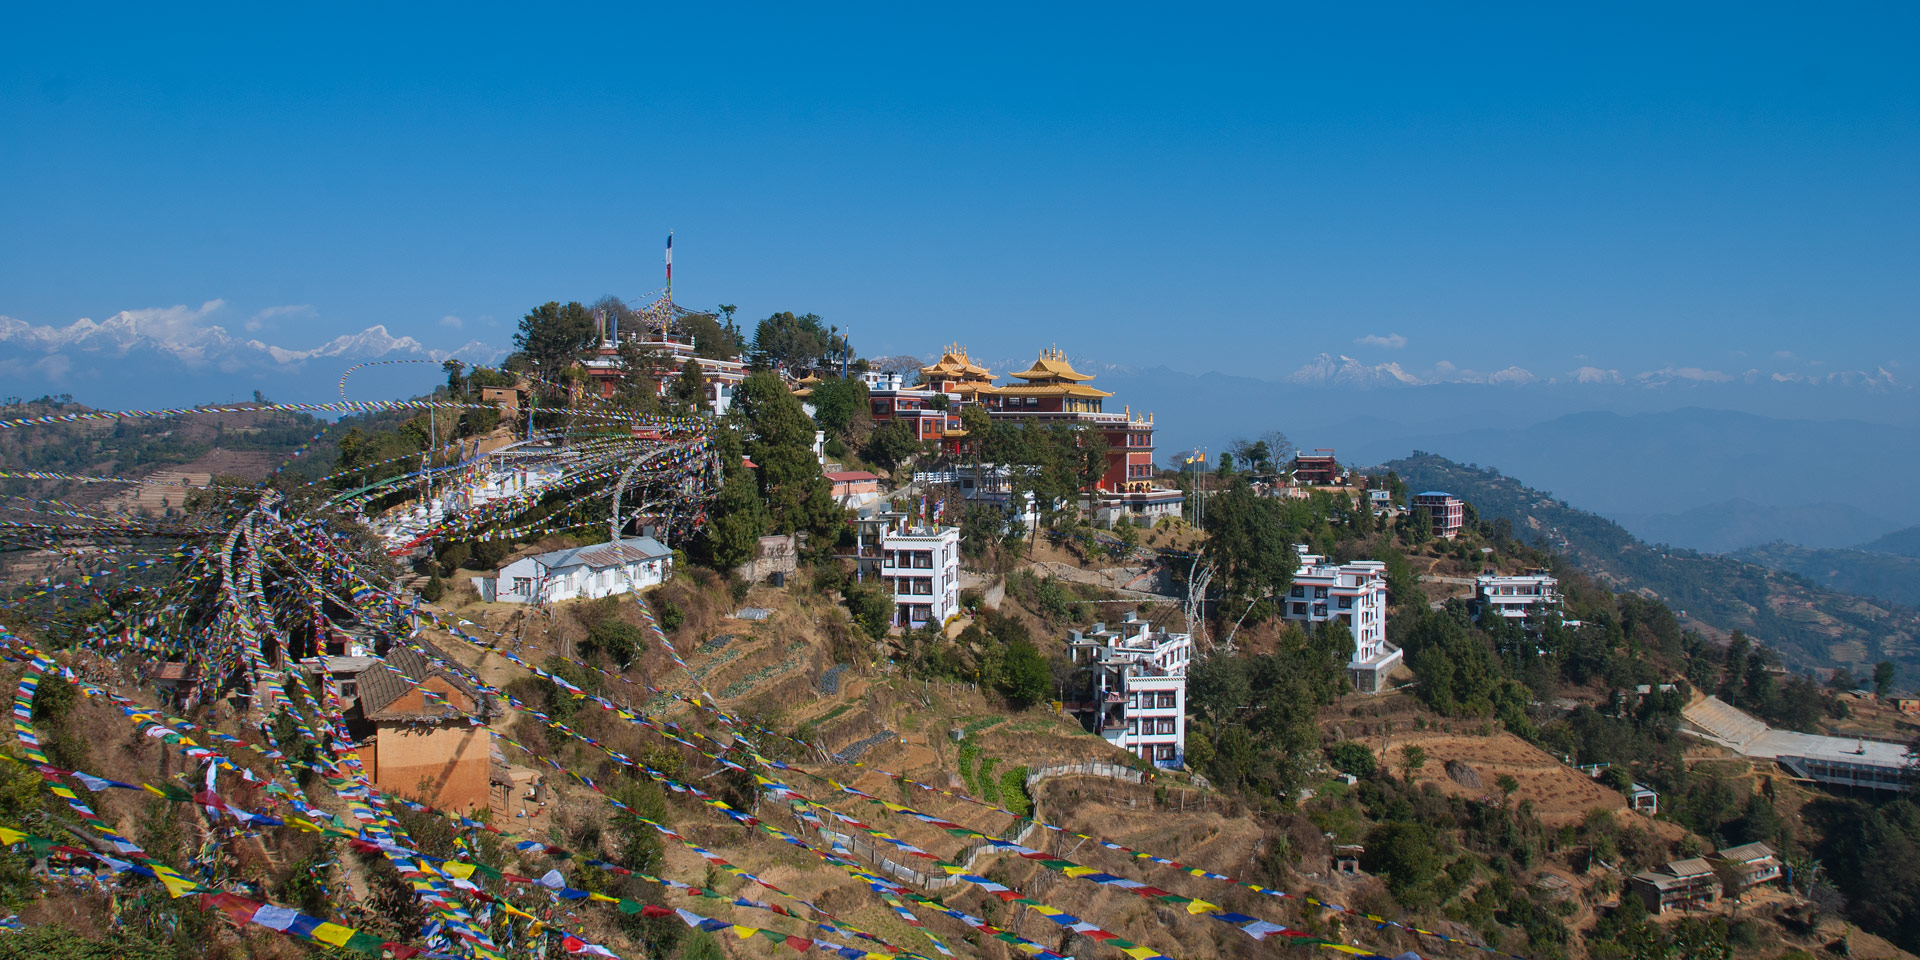 Namobuddha Monastery on the Balthali trek in Nepal